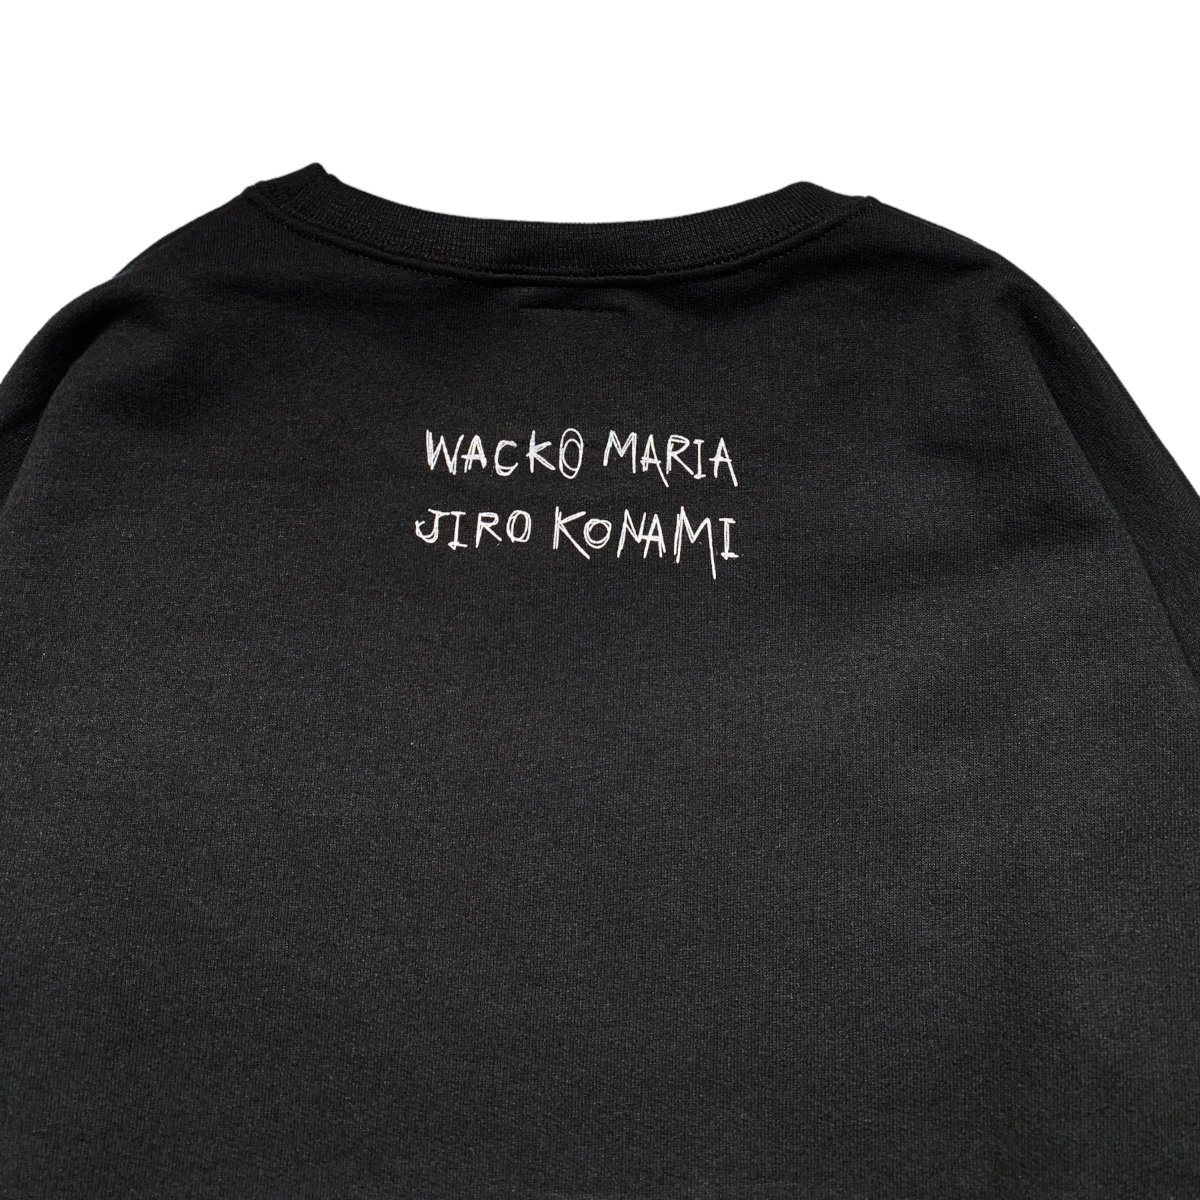 WACKO MARIA《ワコマリア》JIRO KONAMI / CREW NECK SWEAT SHIRT (TYPE 